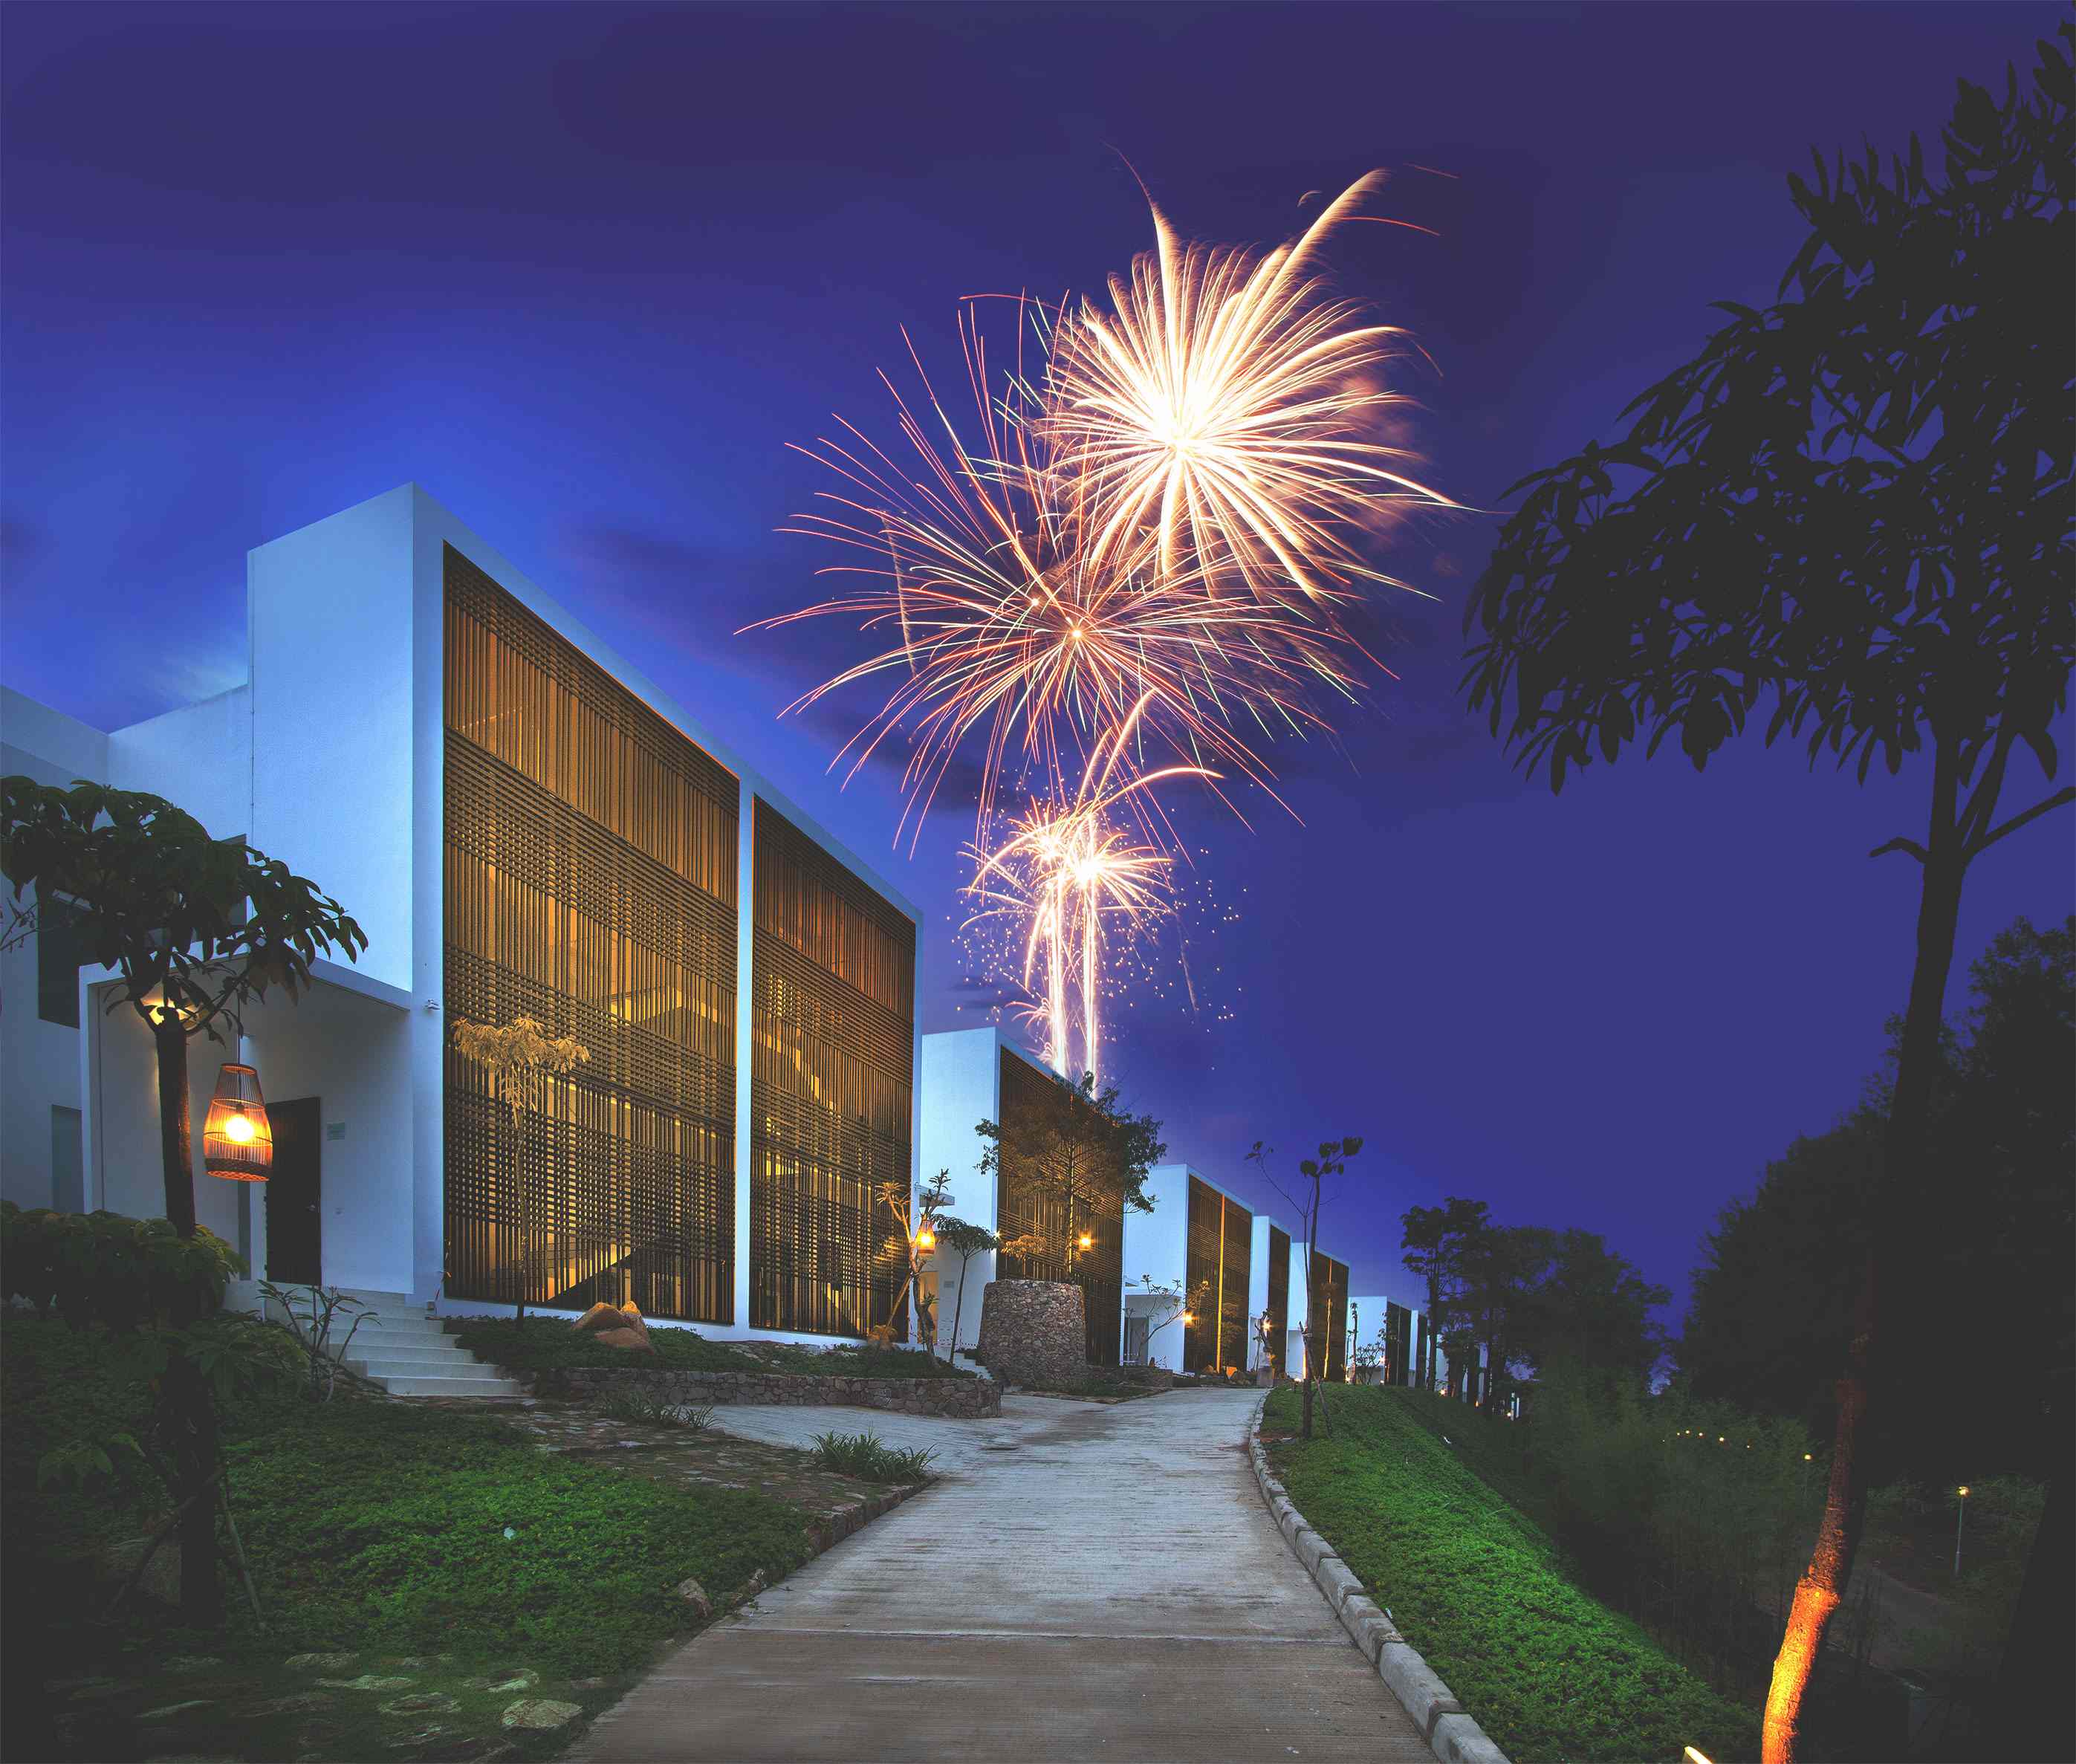 Catch the fireworks display at Montigo Resorts, Nongsa